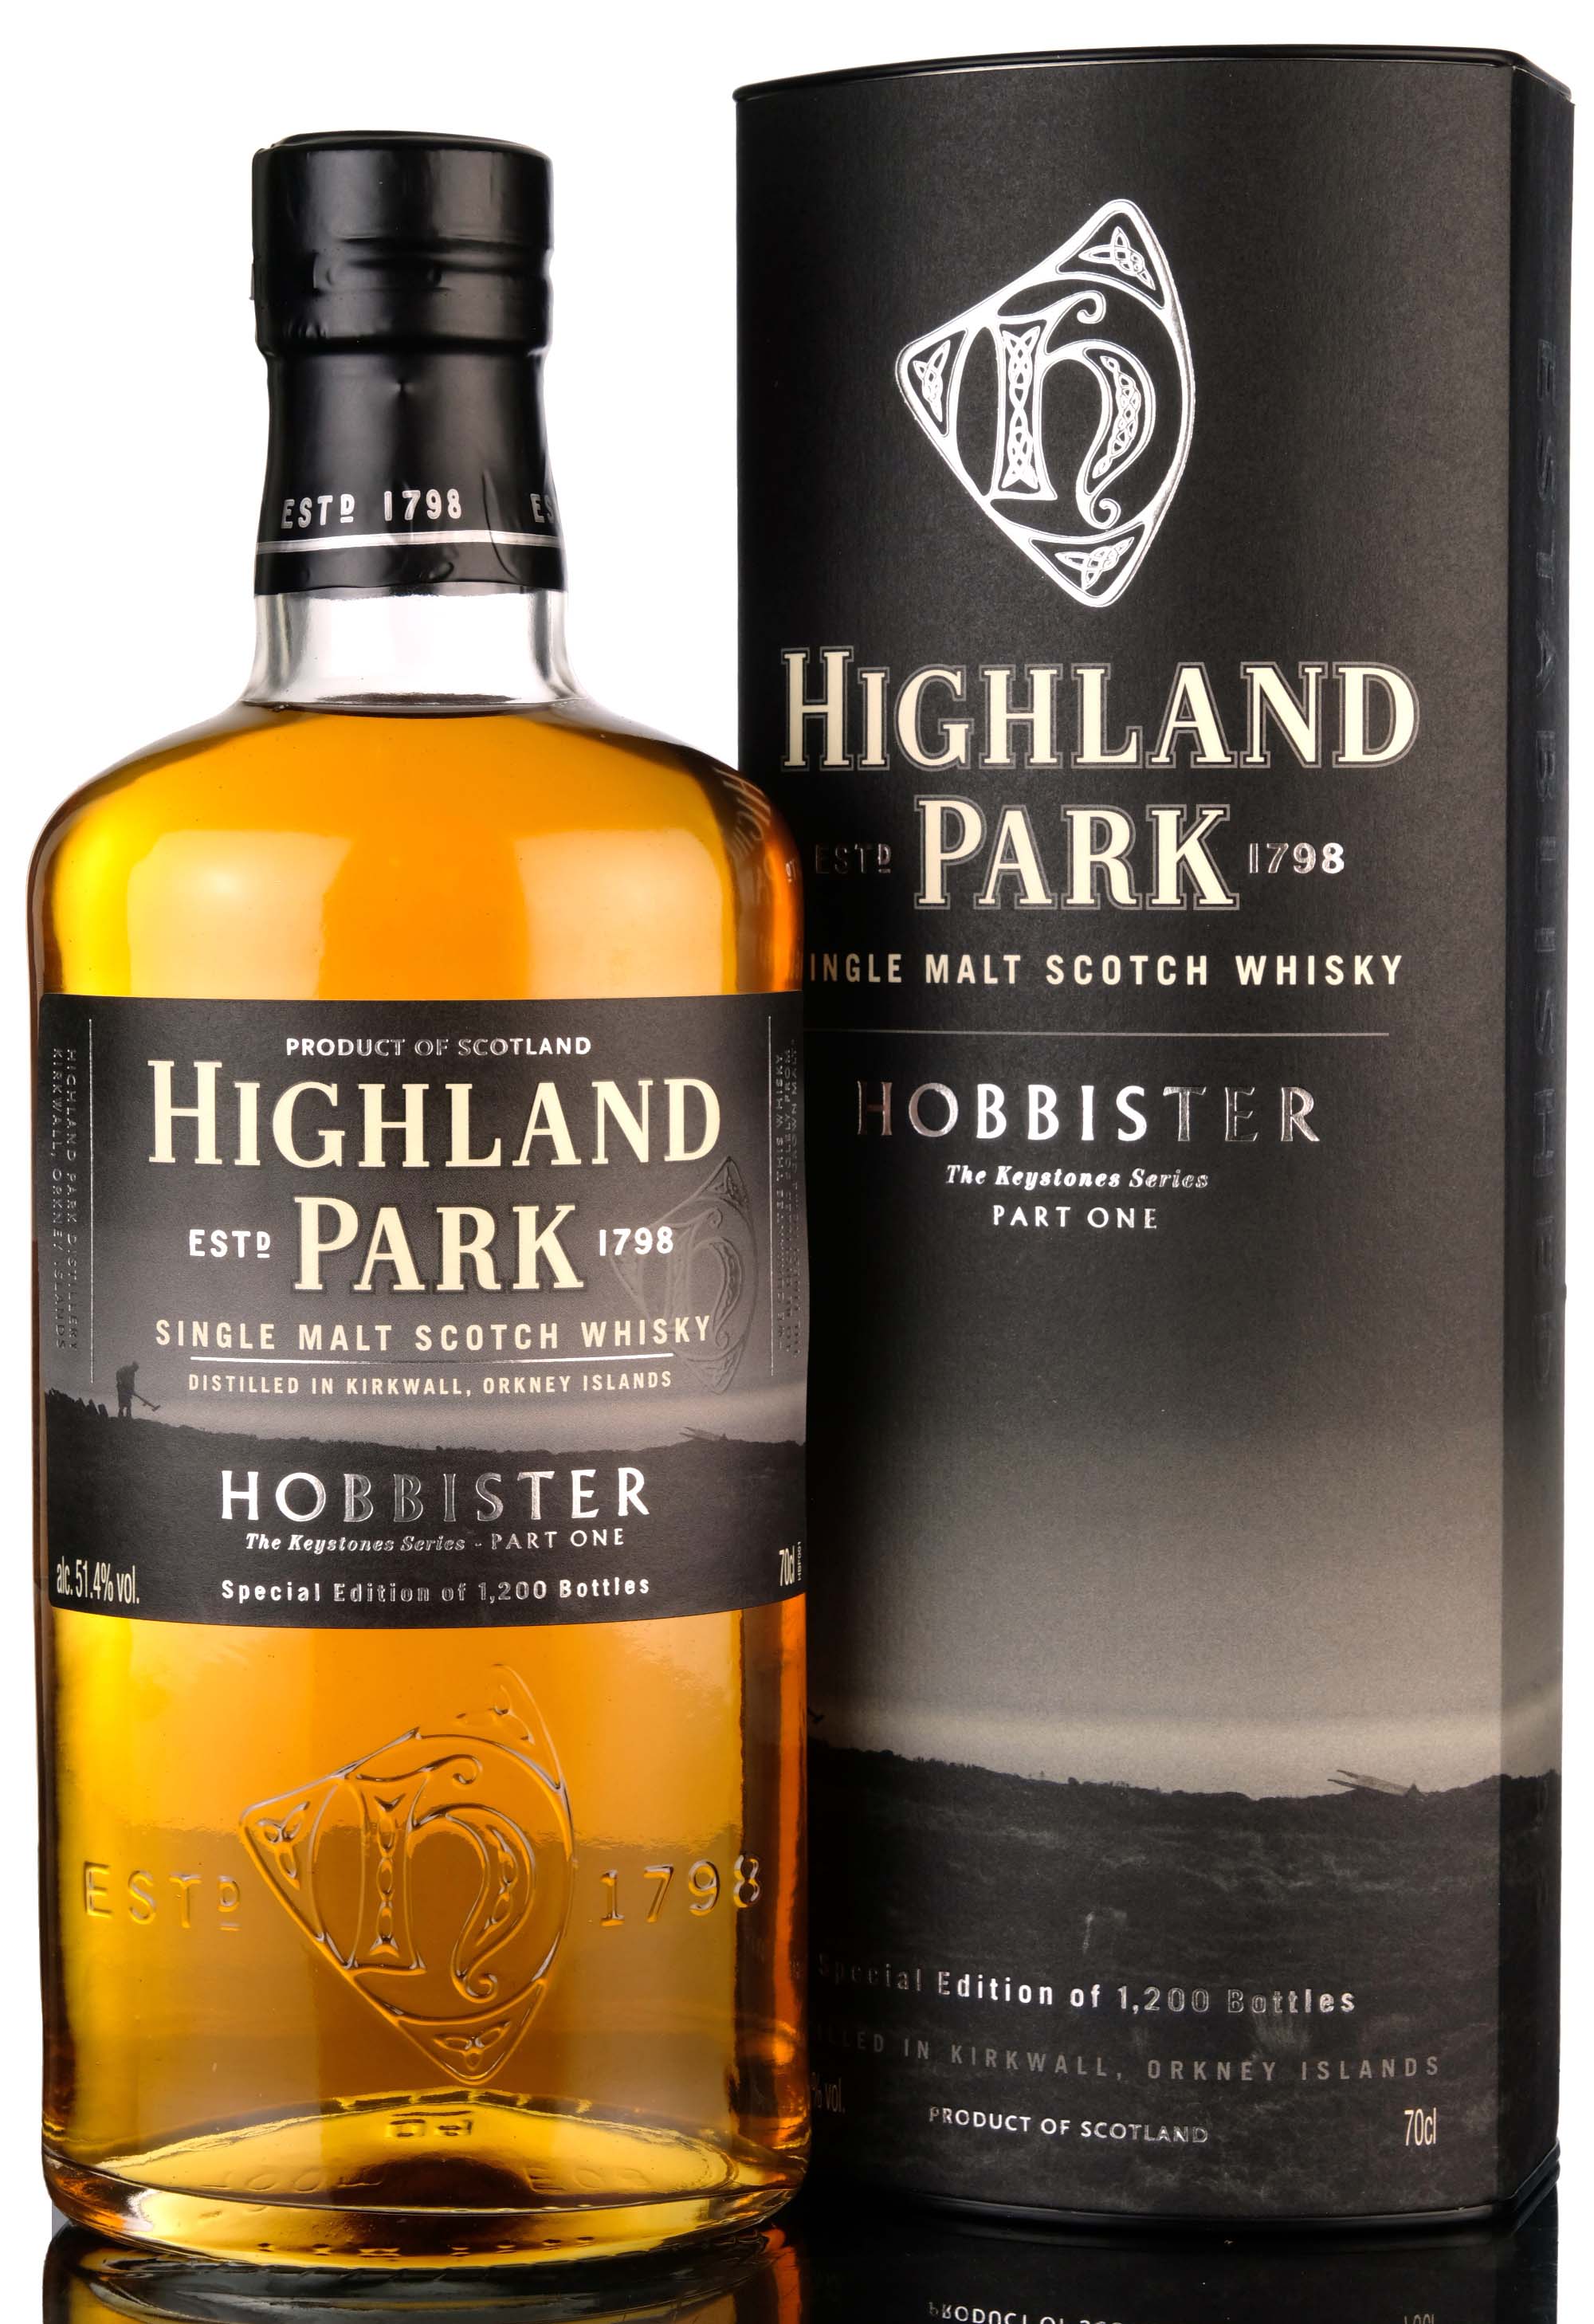 Highland Park Keystones Series Hobbister - Part One - 2016 Release